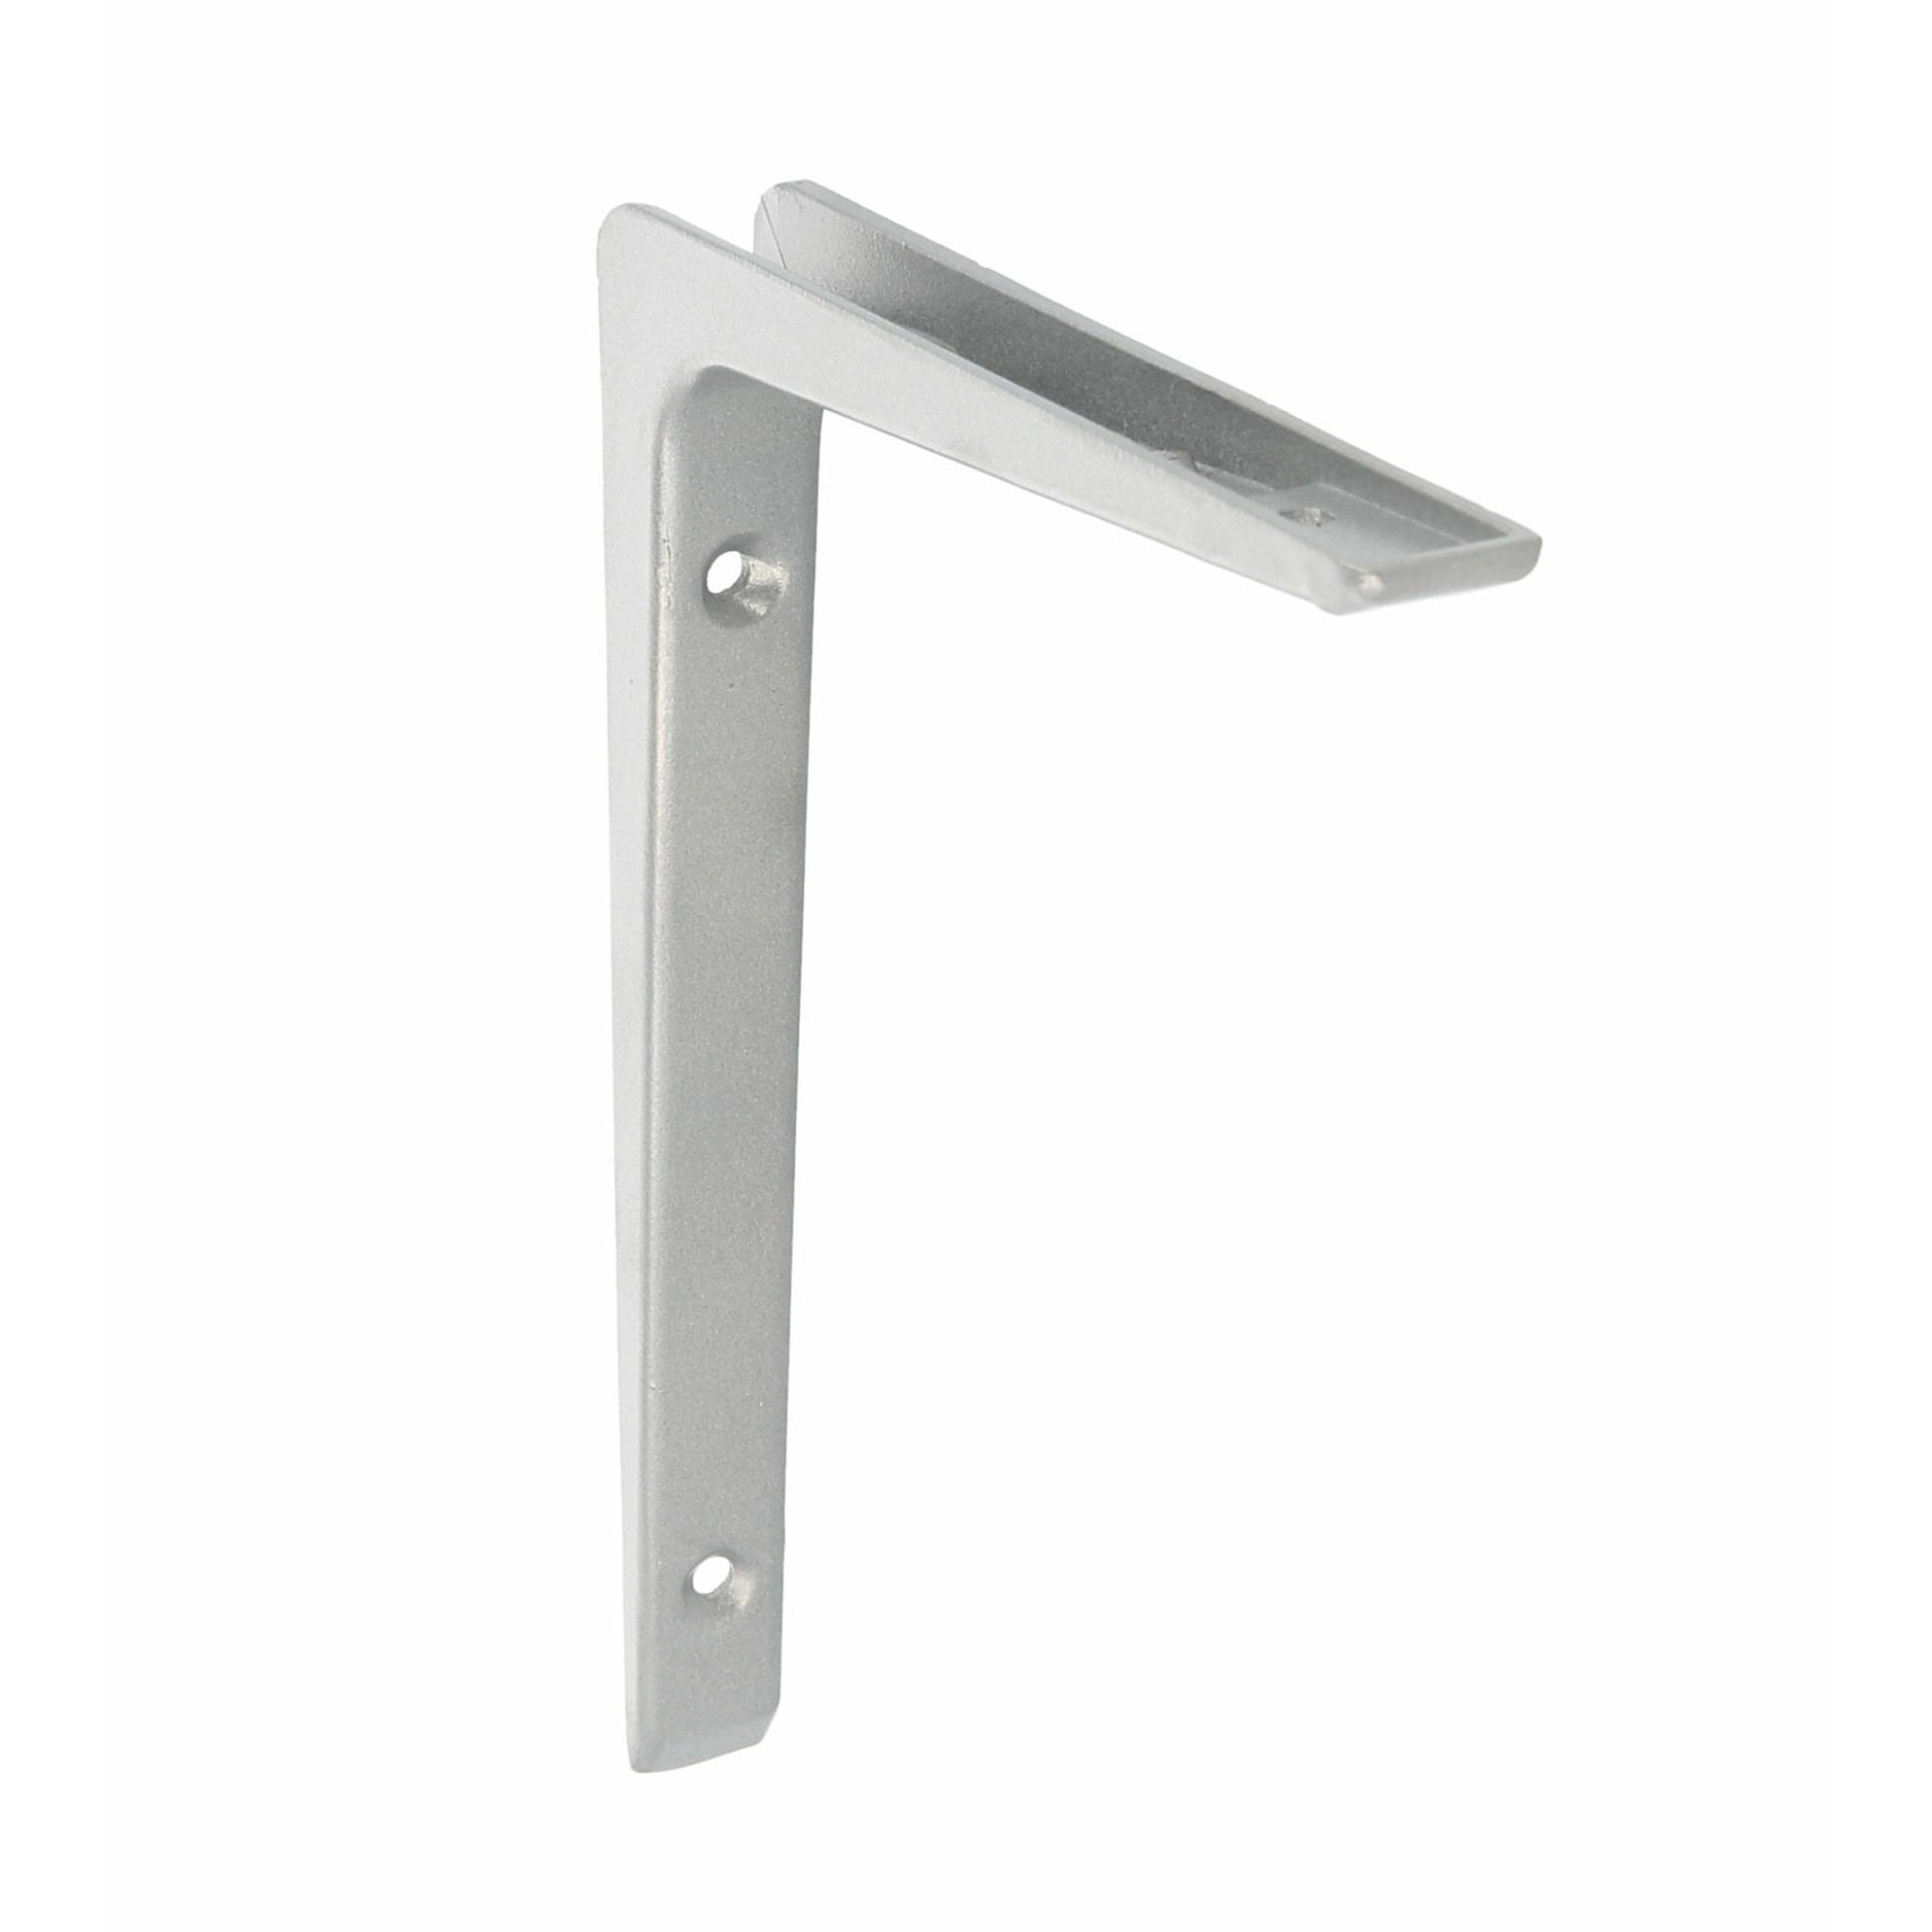 AMIG Plankdrager/planksteun van aluminium - gelakt zilvergrijs - H200 x B150 mm -